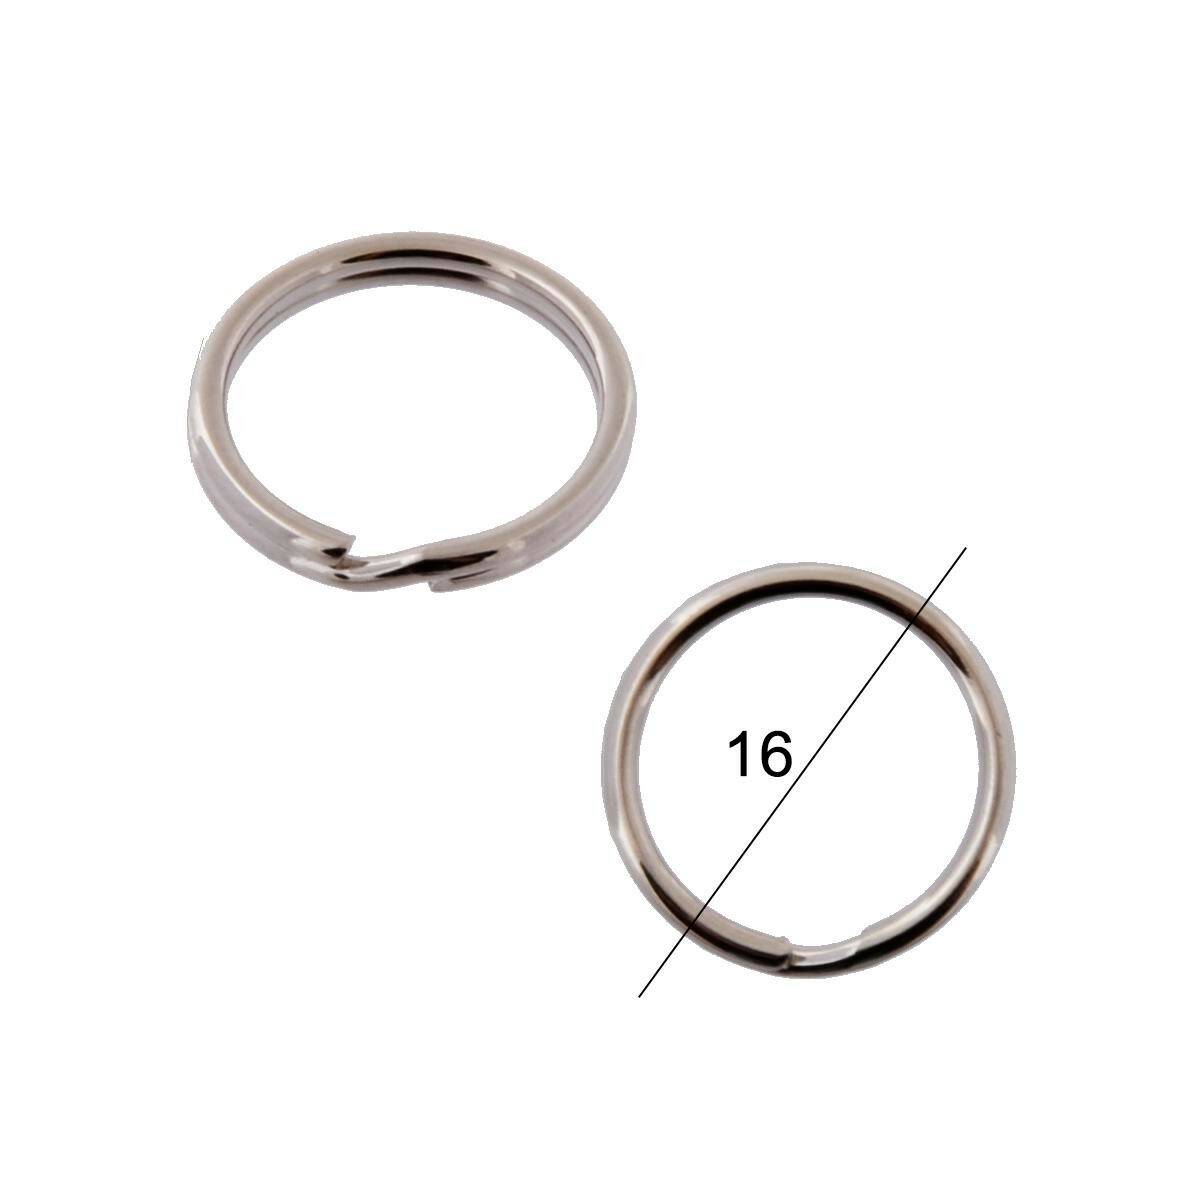 Key rings standard - diameter 16mm